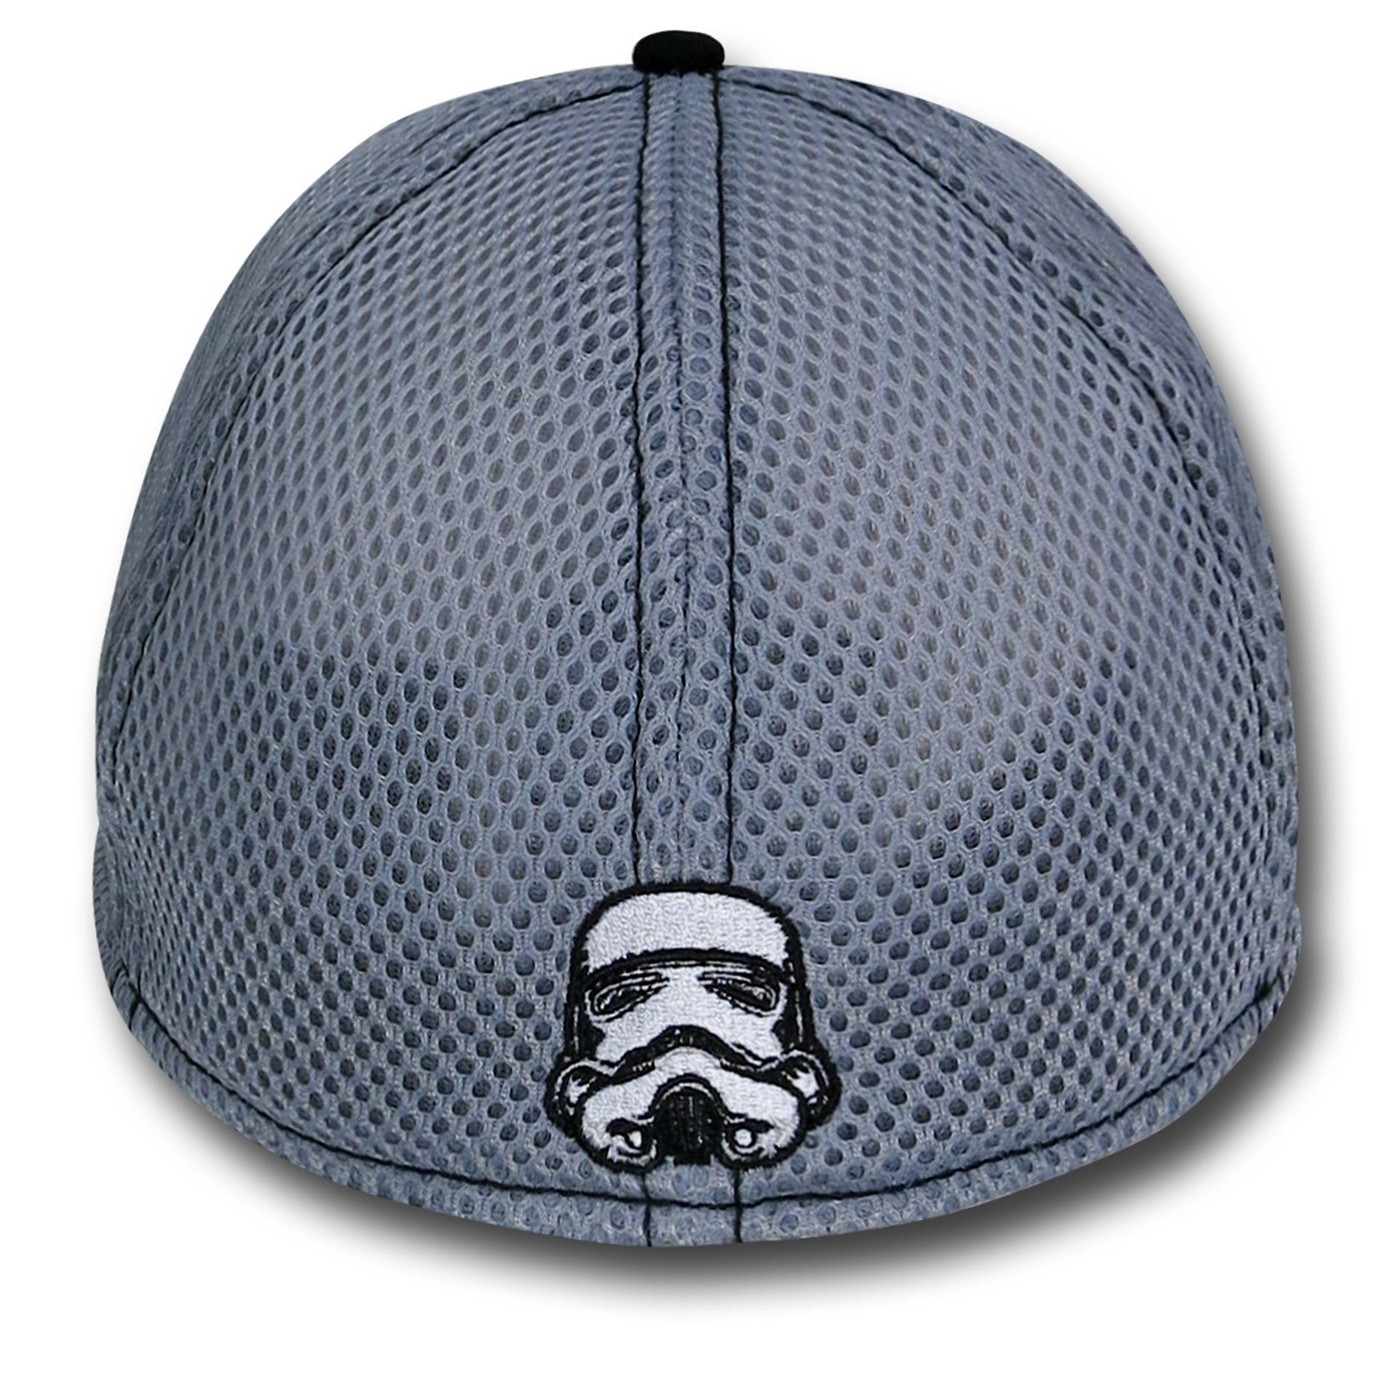 Star Wars Trooper Neo 39Thirty Cap